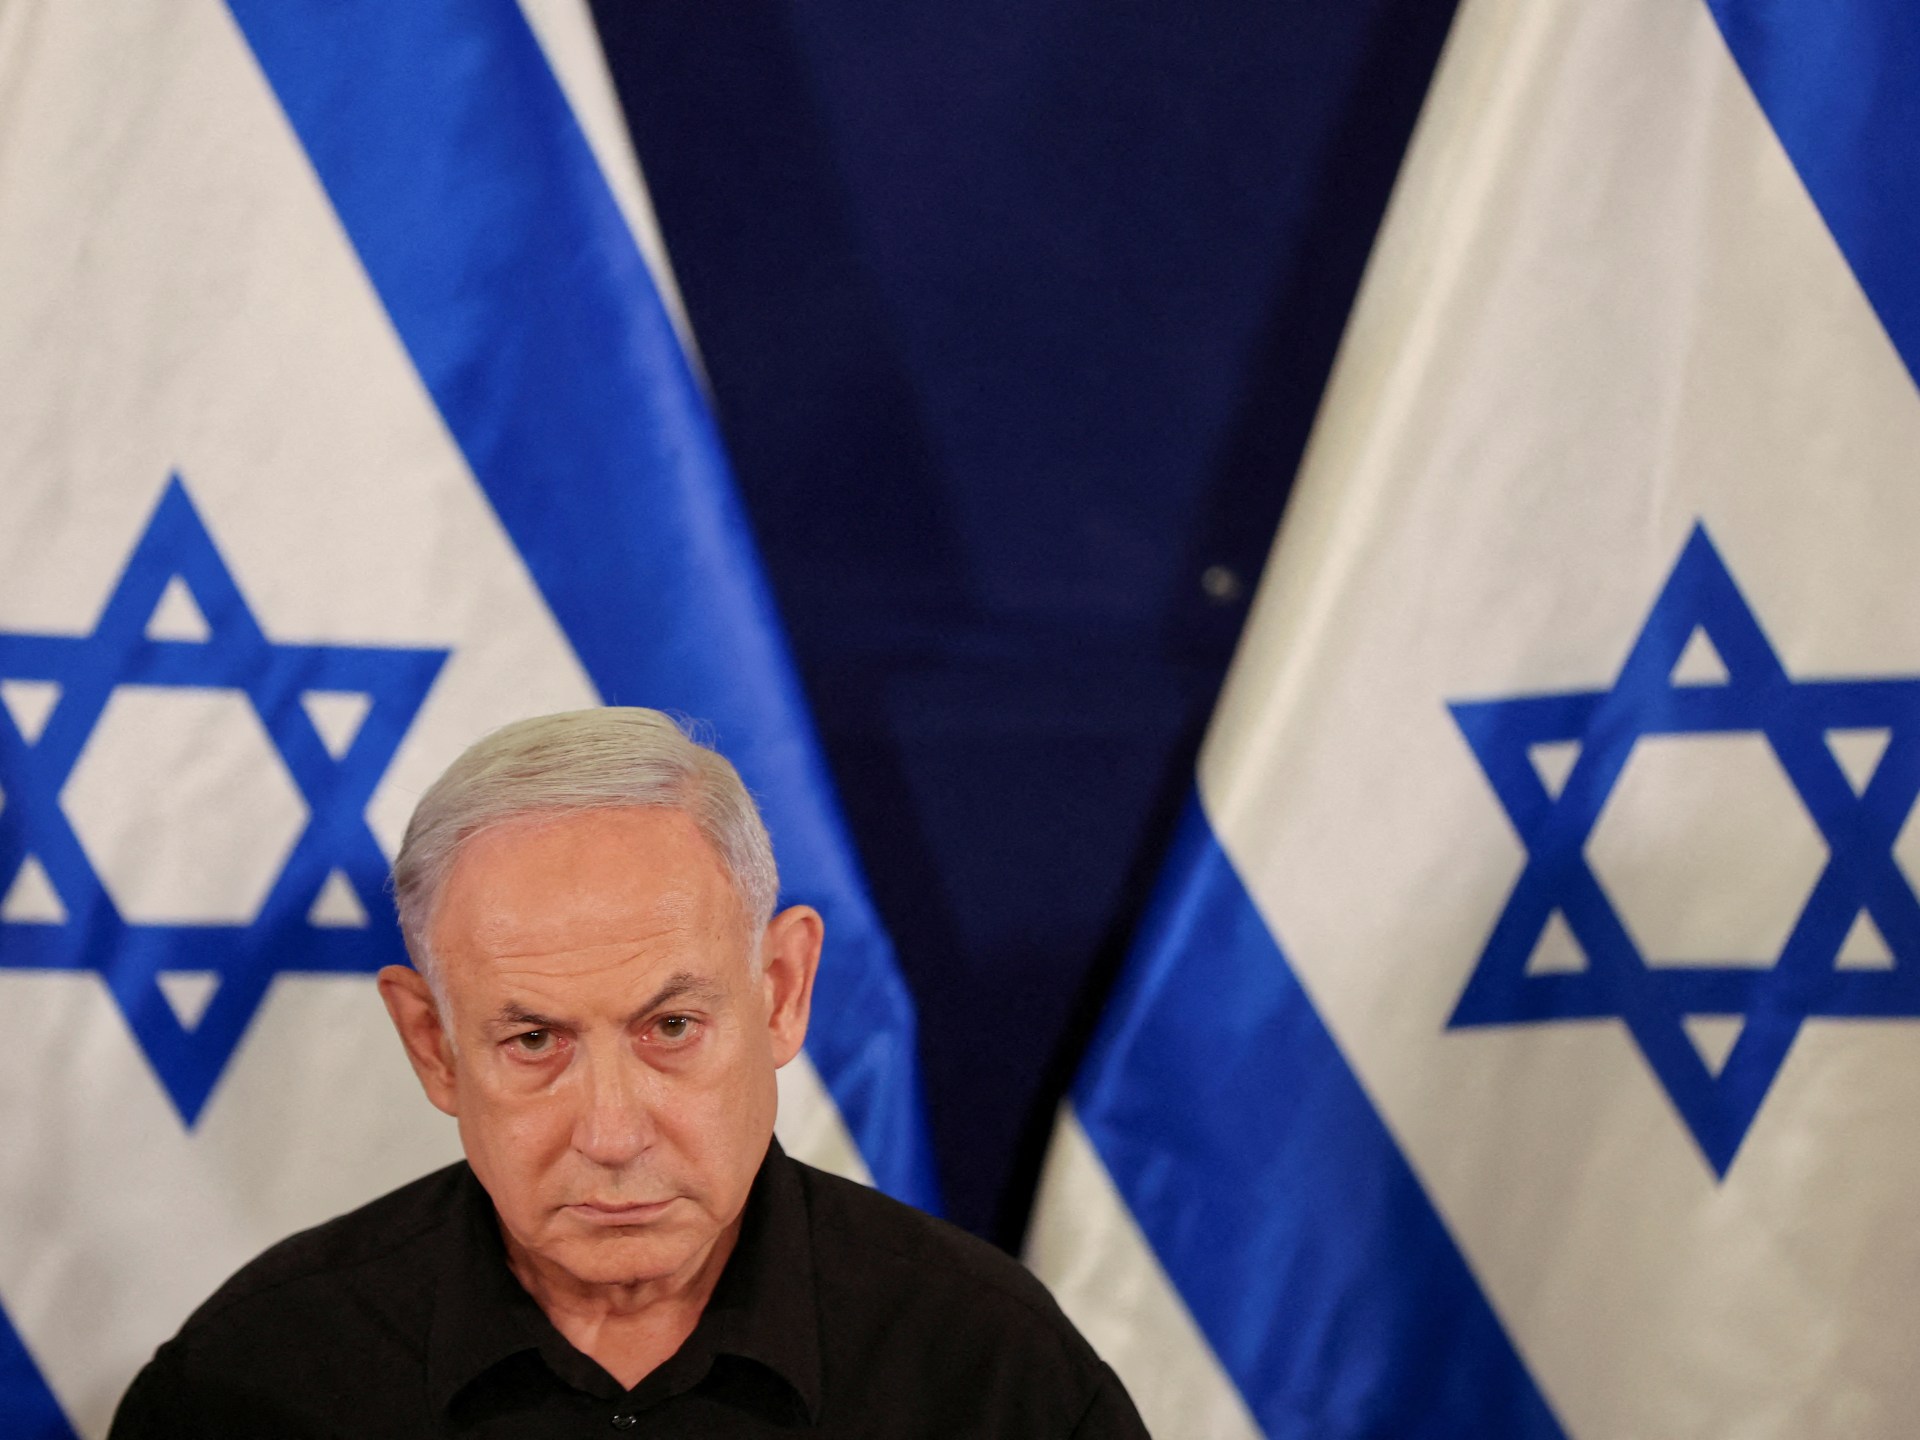 ‘No one trusts Netanyahu’: Israel’s war cabinet divided amid Gaza conflict